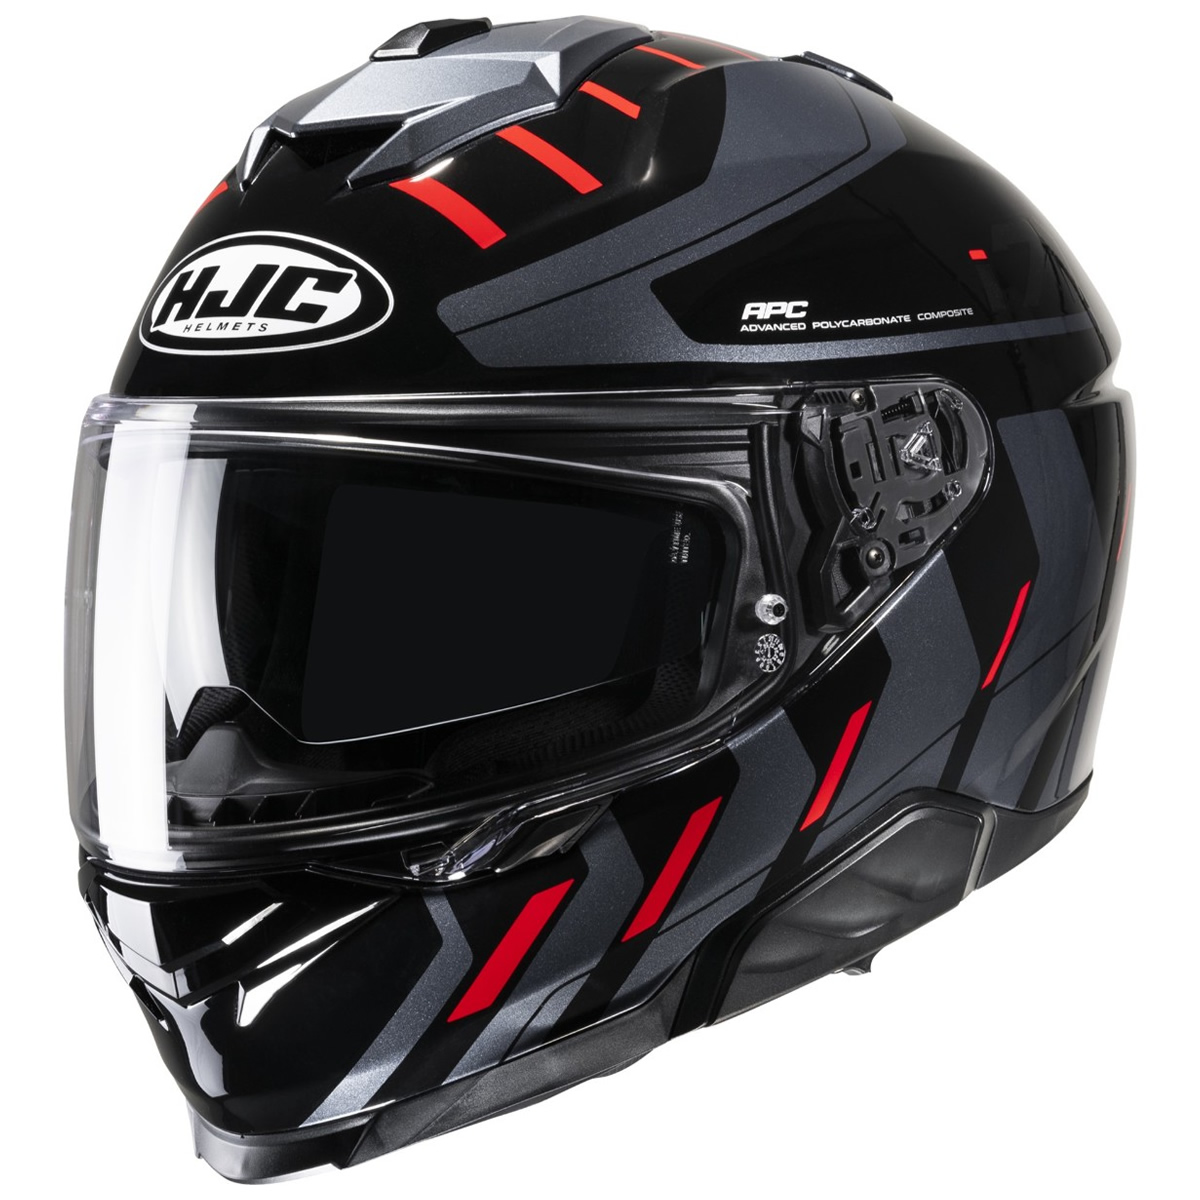 HJC Helm i71 Simo, schwarz-rot